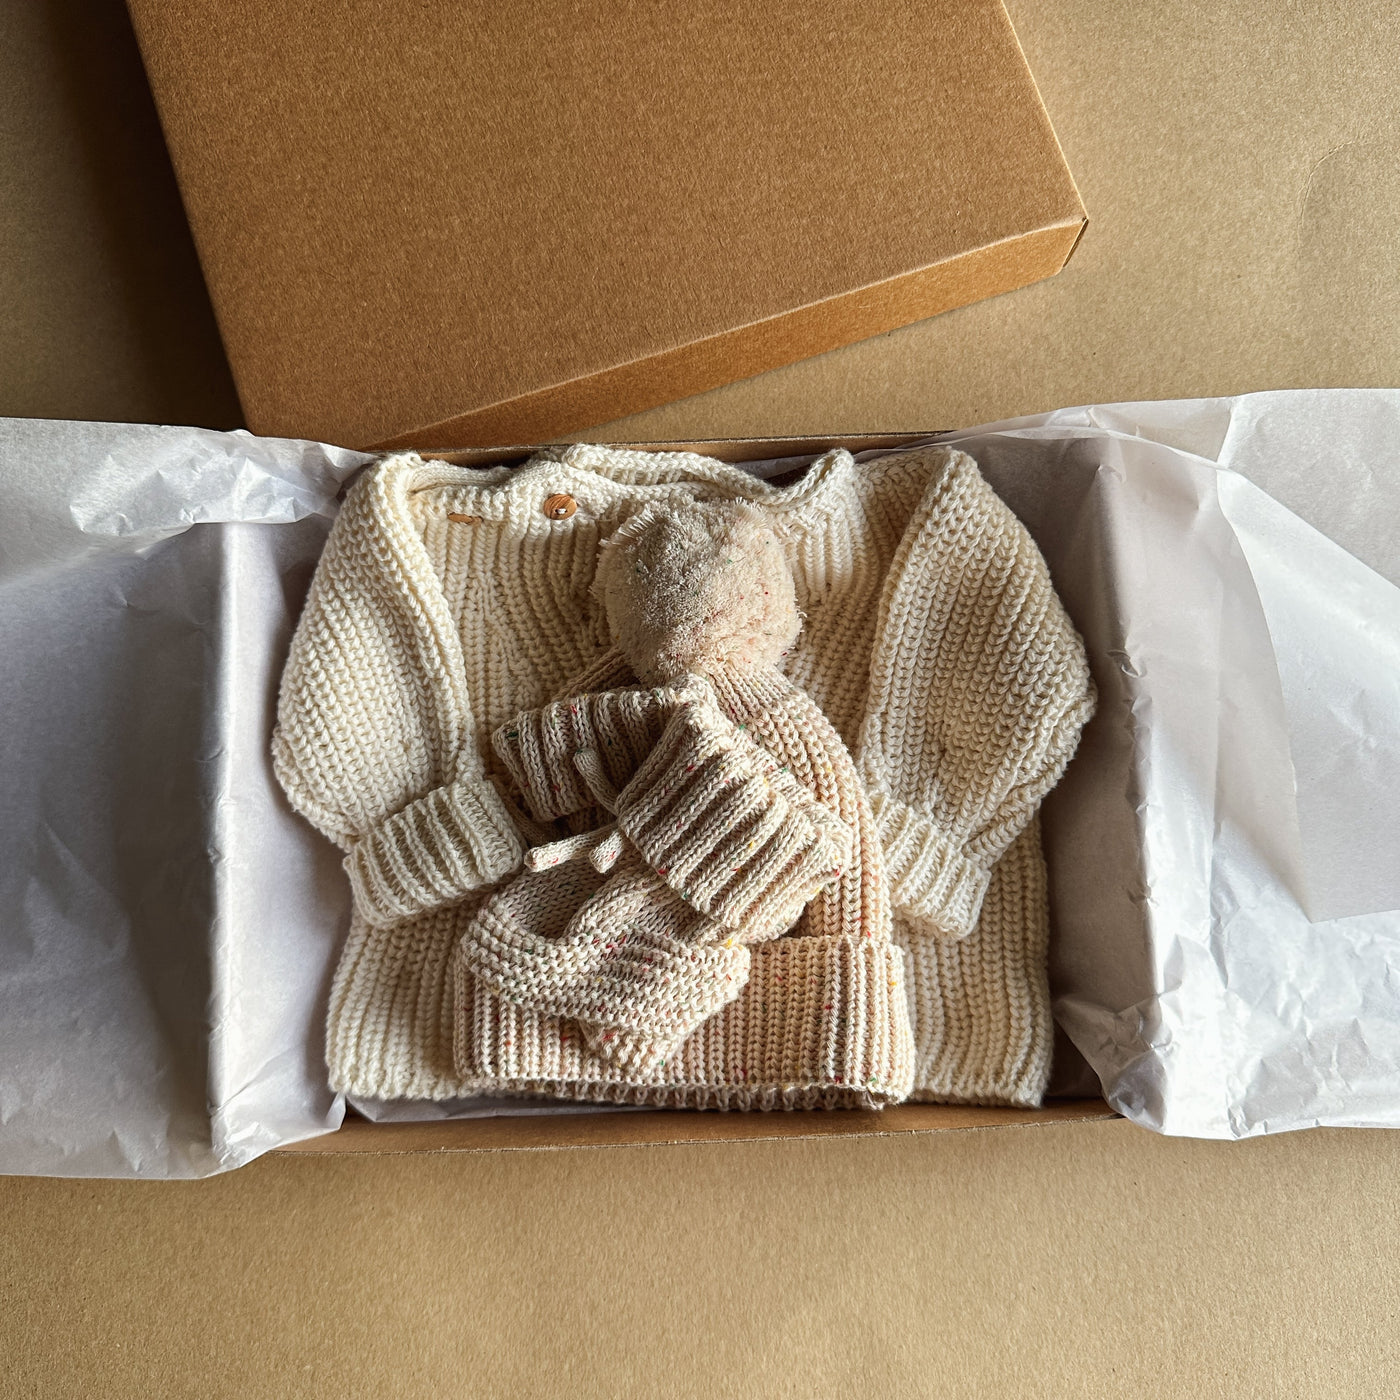 Baby Gift Box - Inverno Maglione Cappellino e Scarpine - Baby Clothes - Baby Rainbow Shop - P.IVA 04847500230